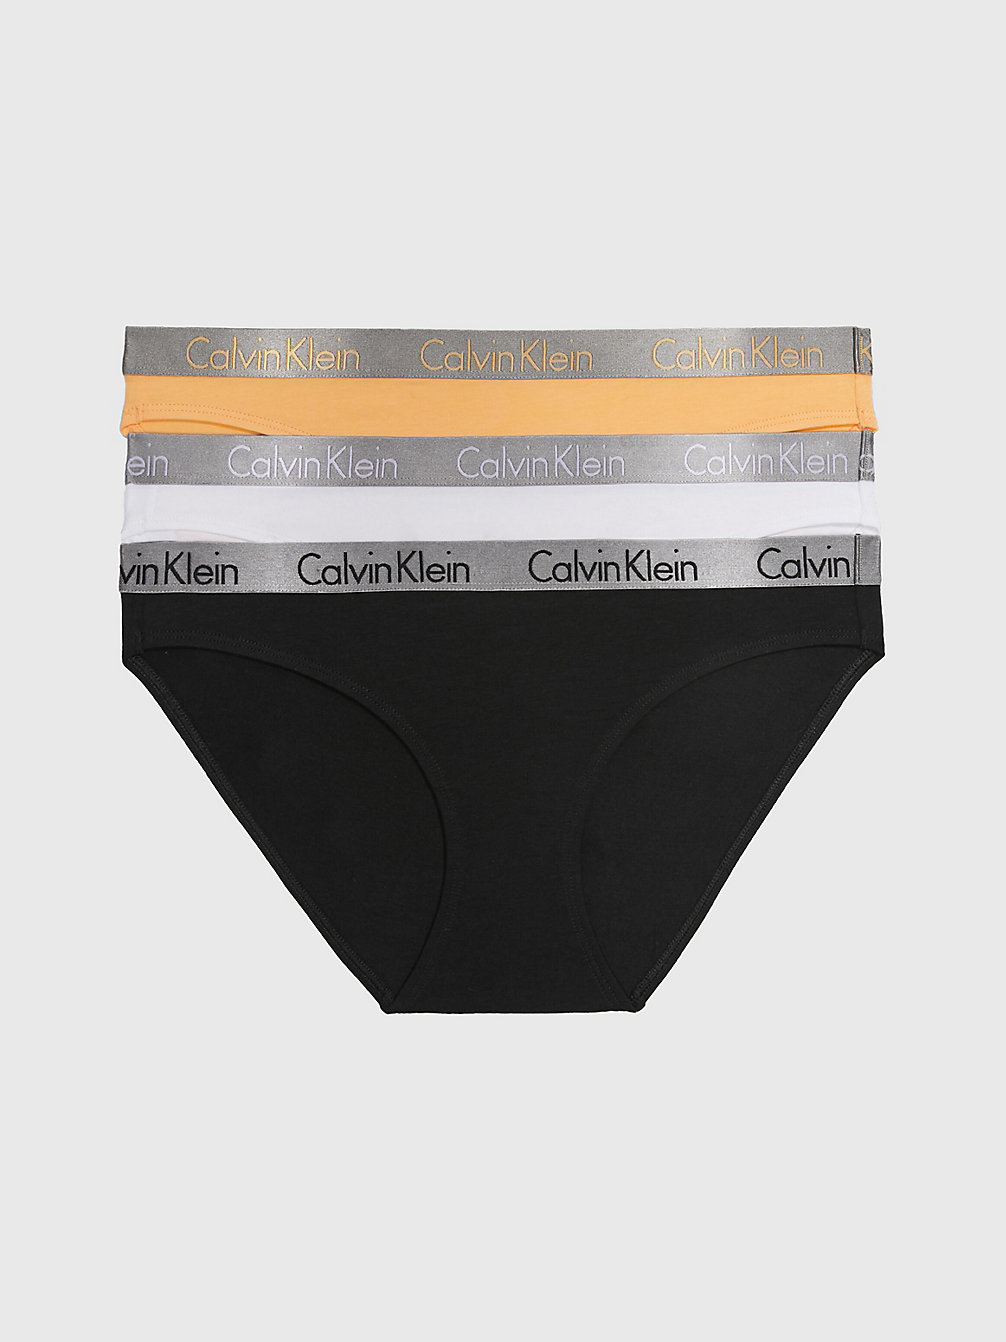 BLACK/WHITE/ORANGE > 3er-Pack Slips - Radiant Cotton > undefined Damen - Calvin Klein